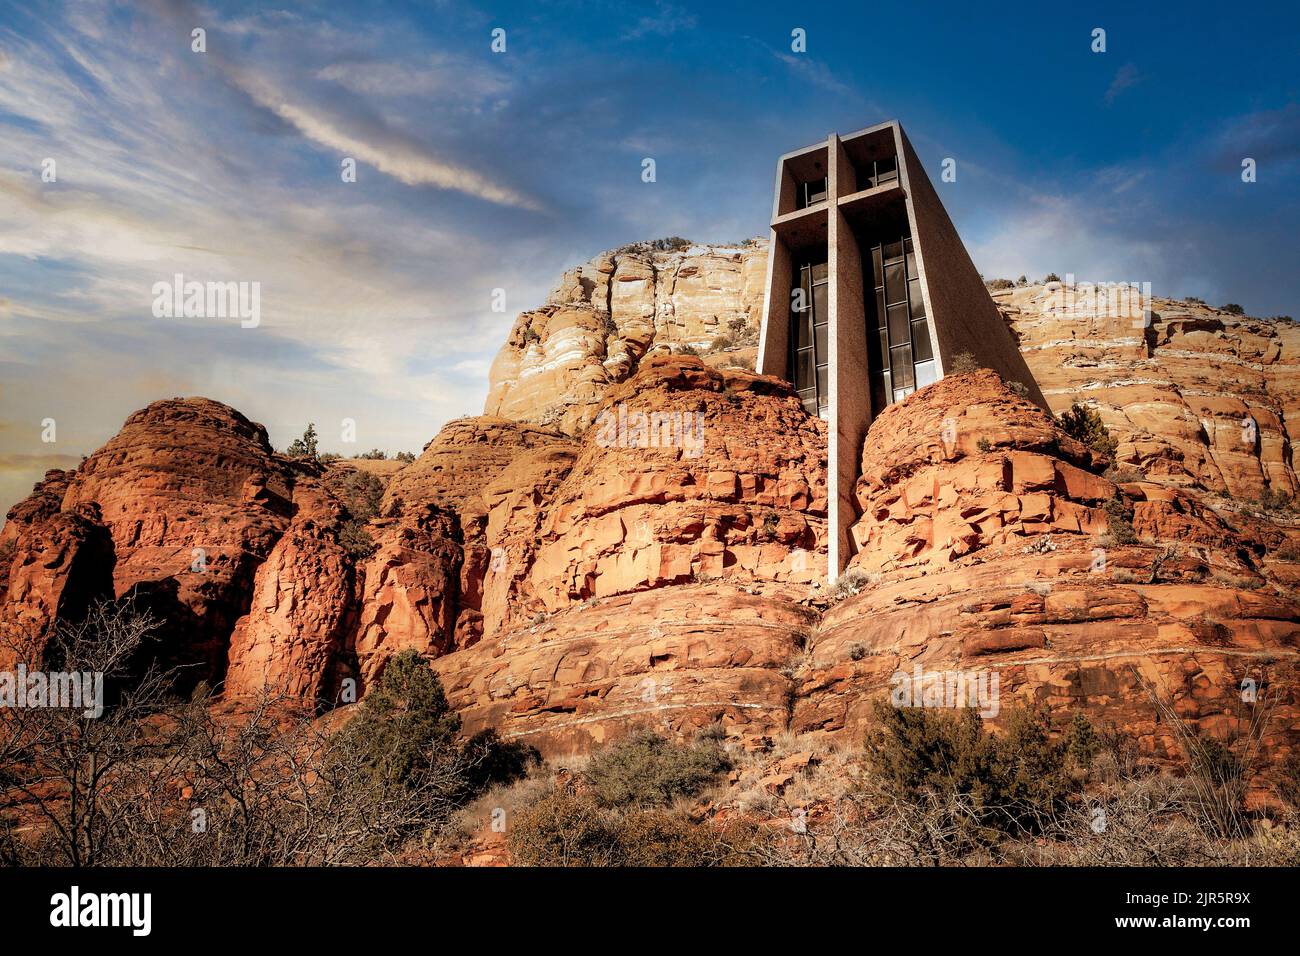 Die Kirche des Heiligen Kreuzes ist anmutig in den roten Felsen von Sedona, Arizona gebaut. Stockfoto